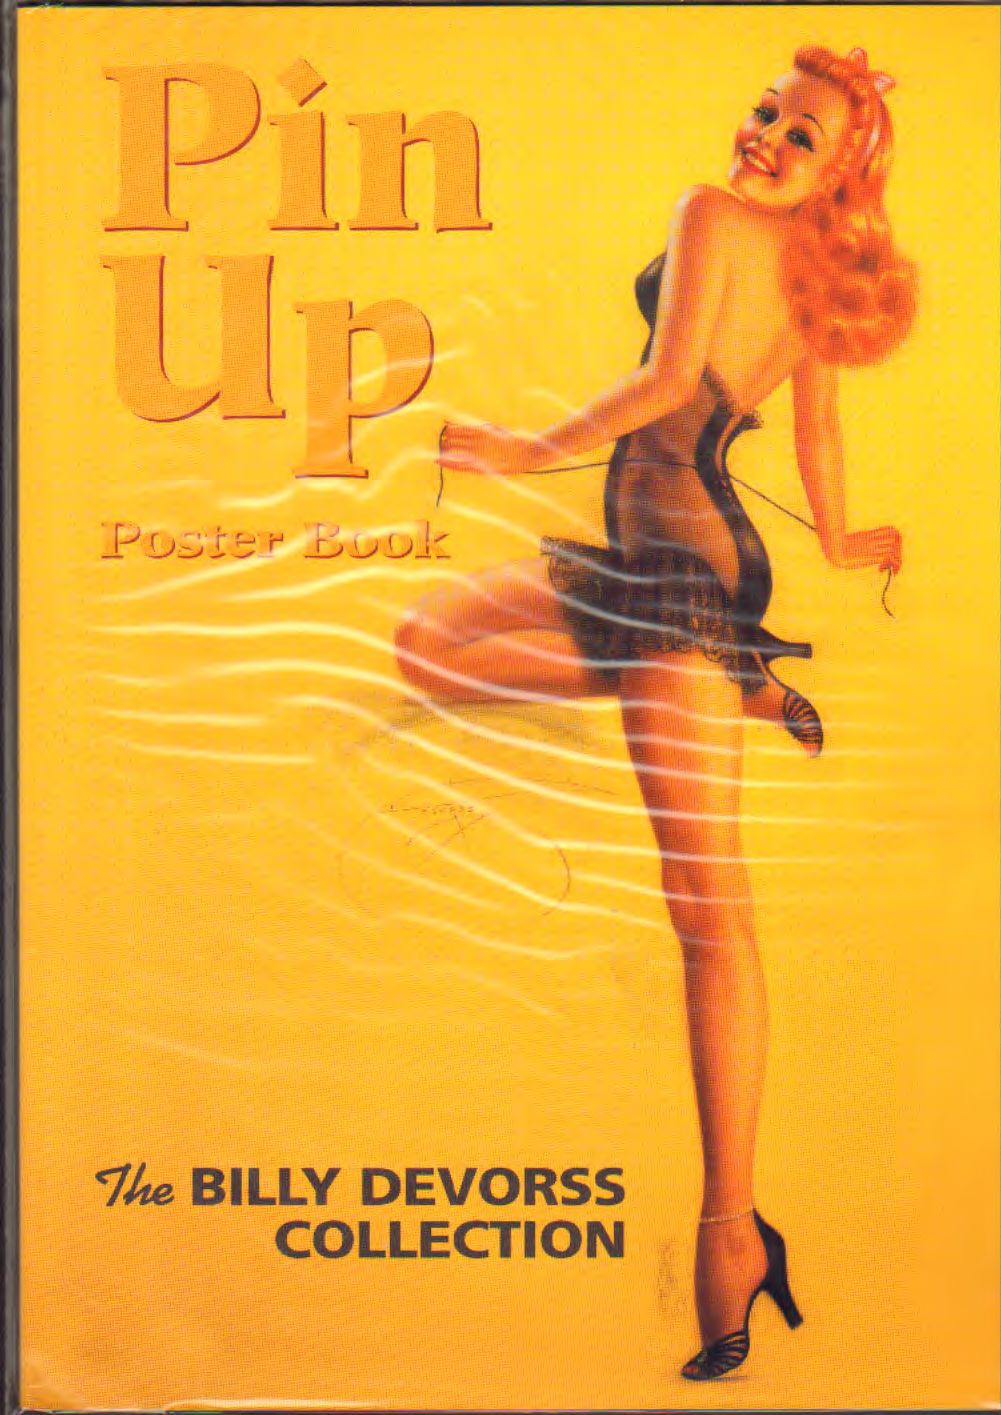 Billy Devorss - Pin up poster book the Billy Devorss collection